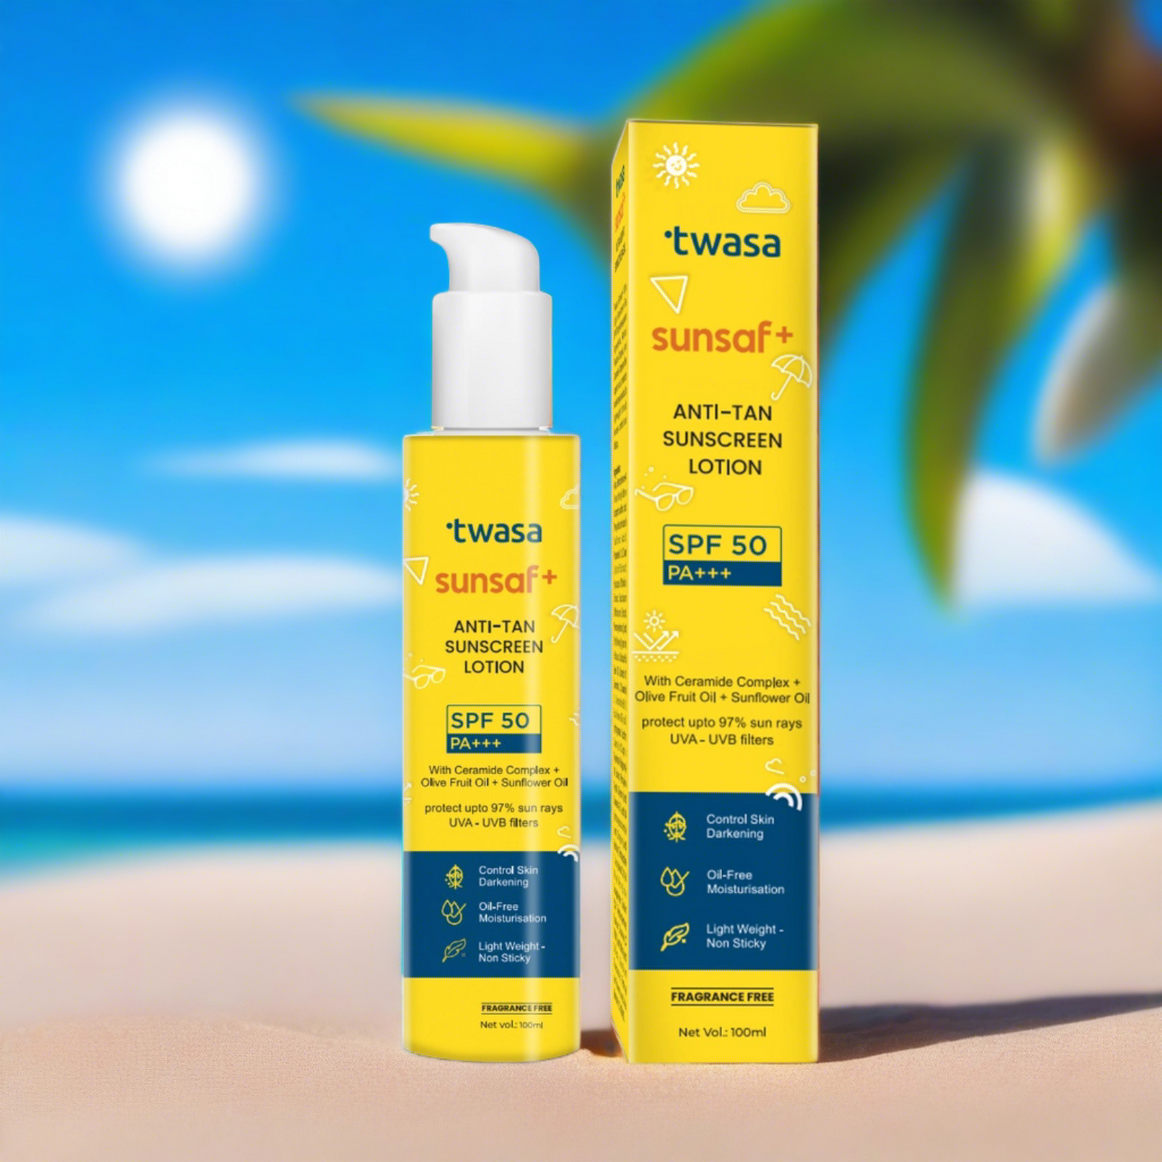 Sunsaf+ Anti-Tan Sunscreen Lotion SPF 50 PA+++